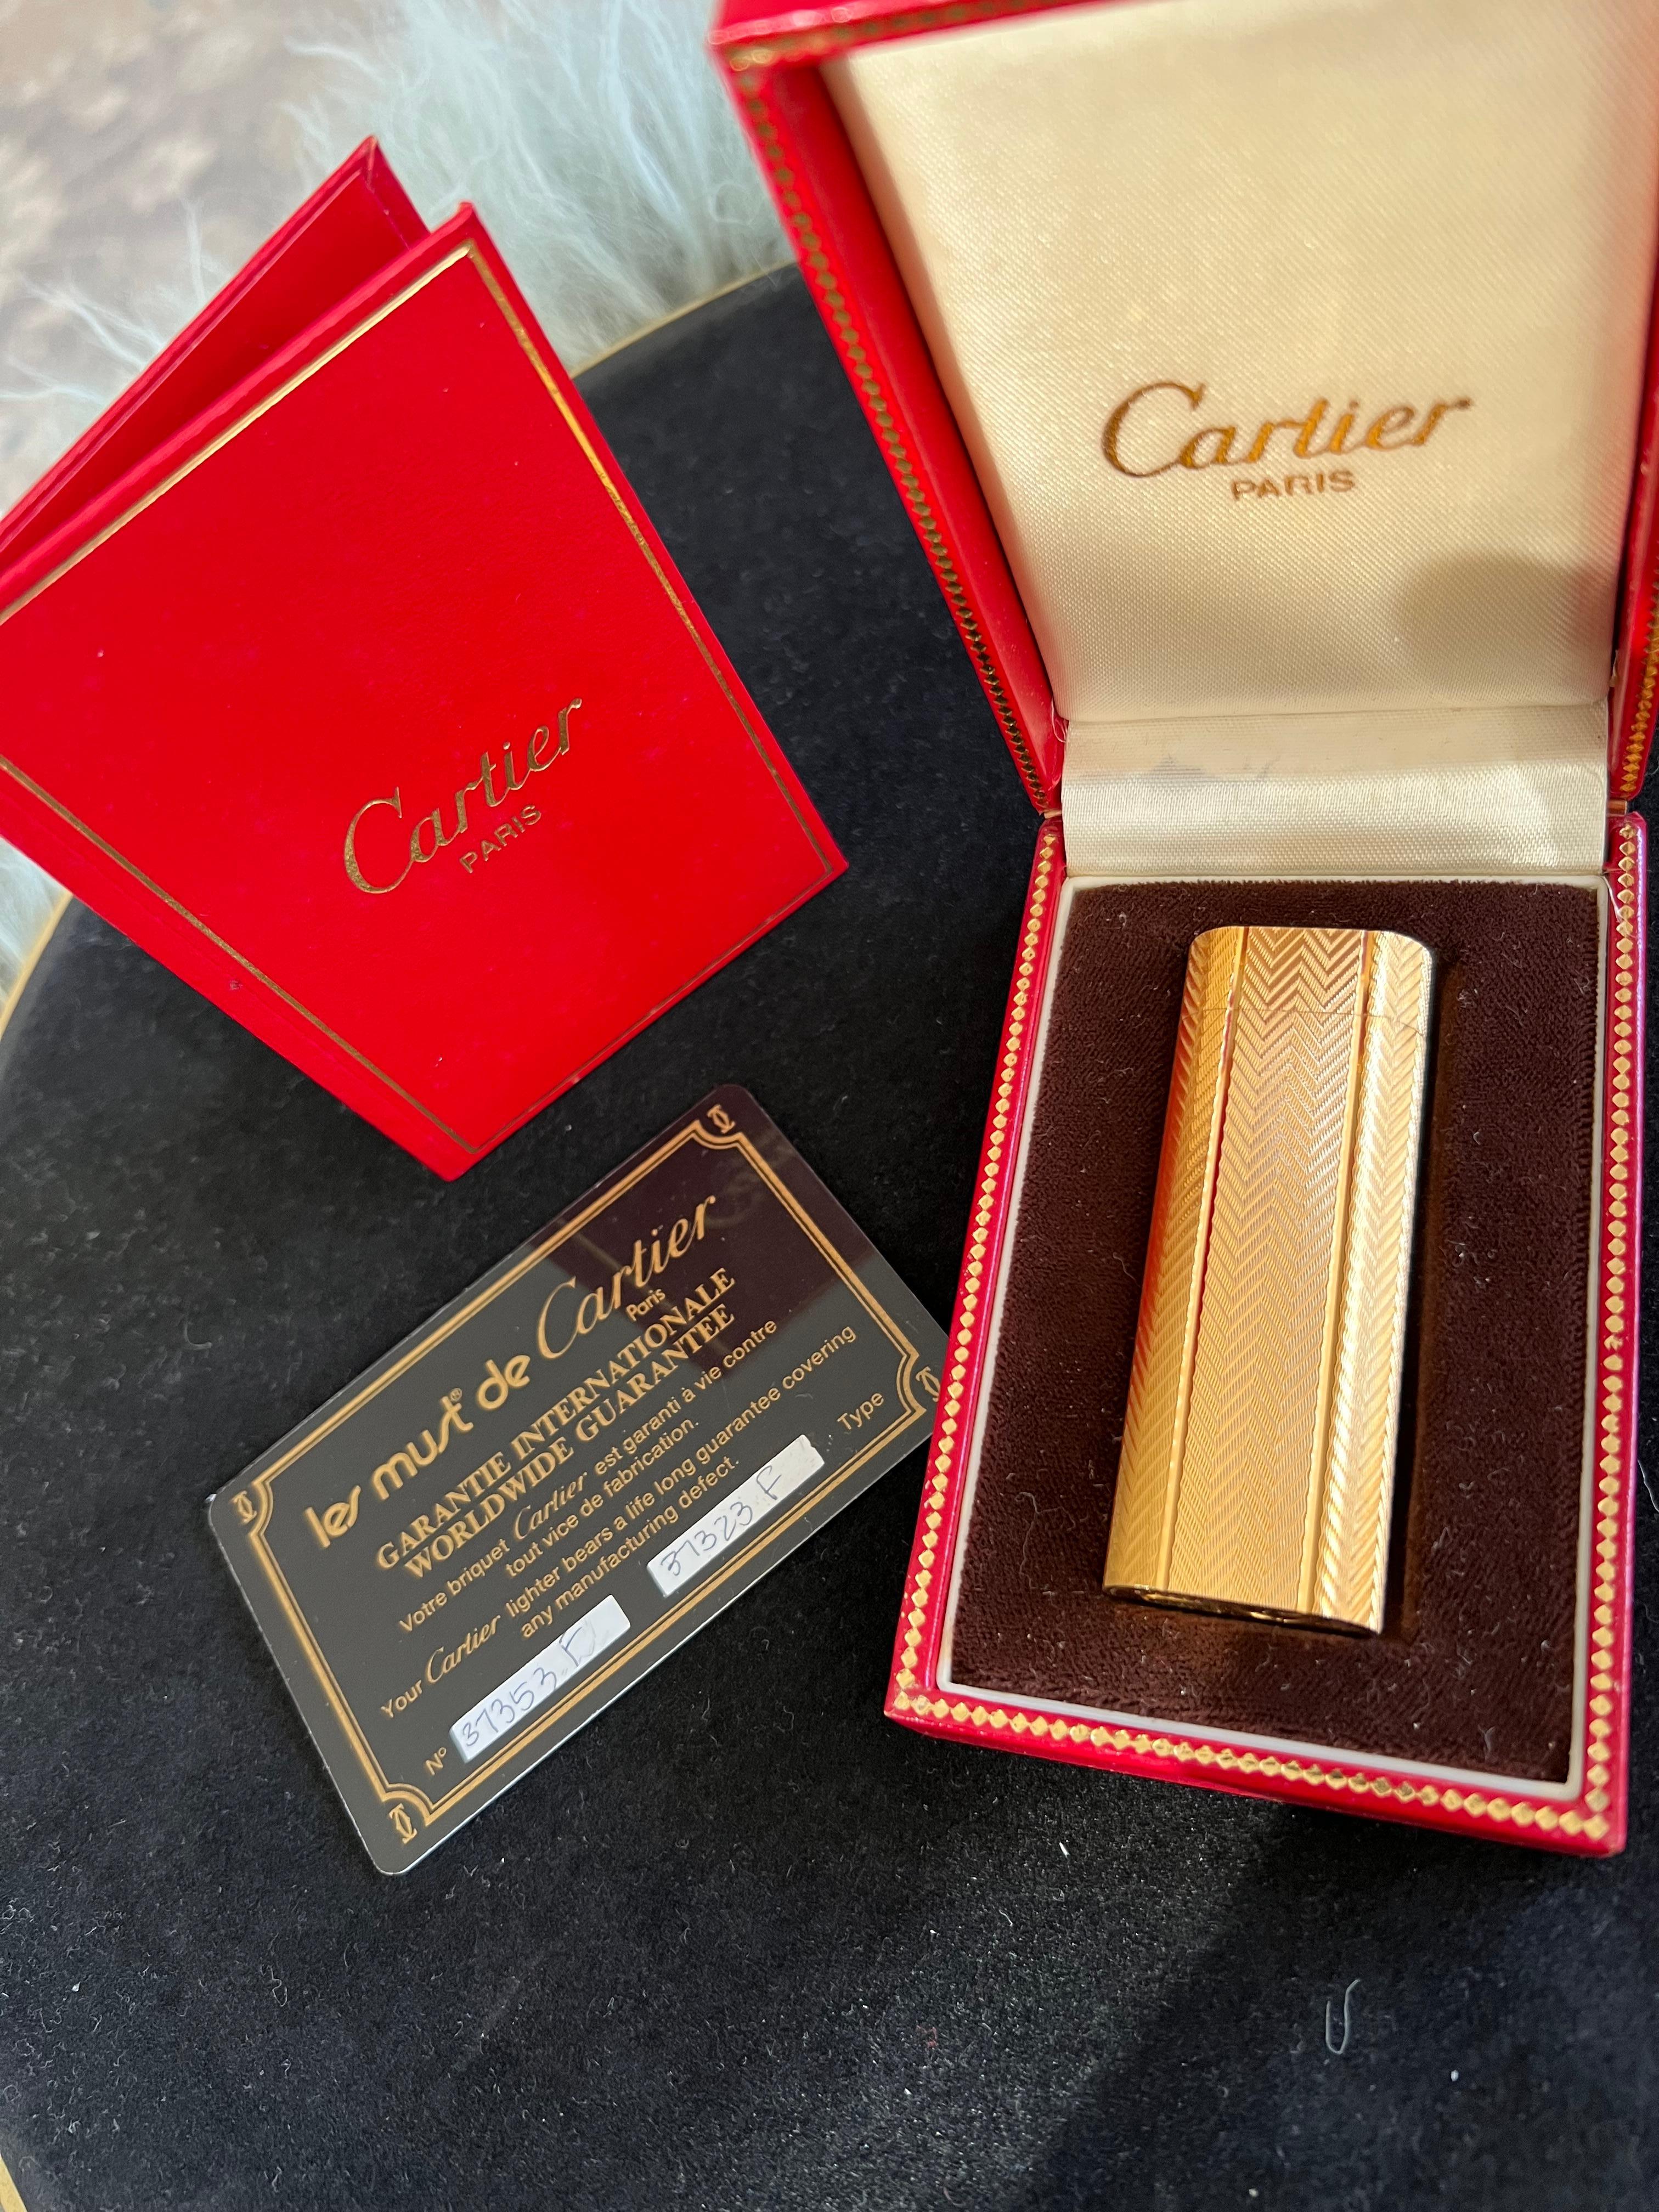 A Les Must De Cartier Paris 18k gold plated lighter 4